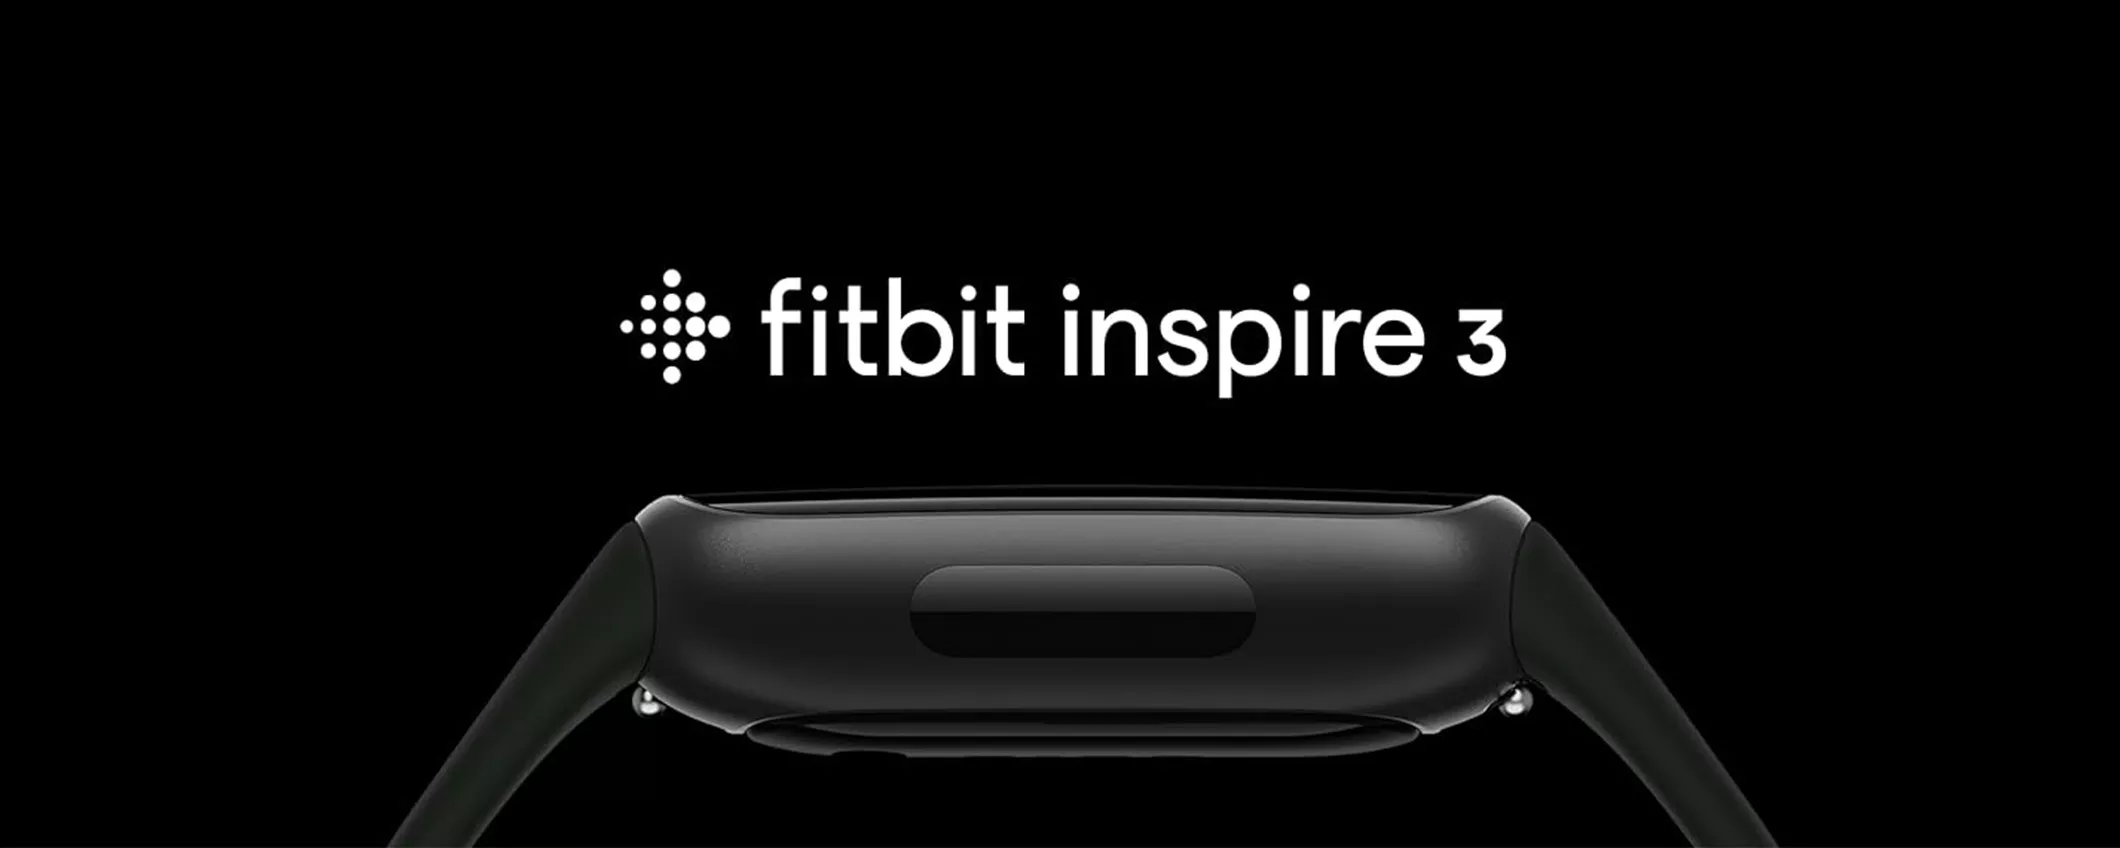 Black Friday: Fitbit Inspire 3 in SUPER SCONTO!